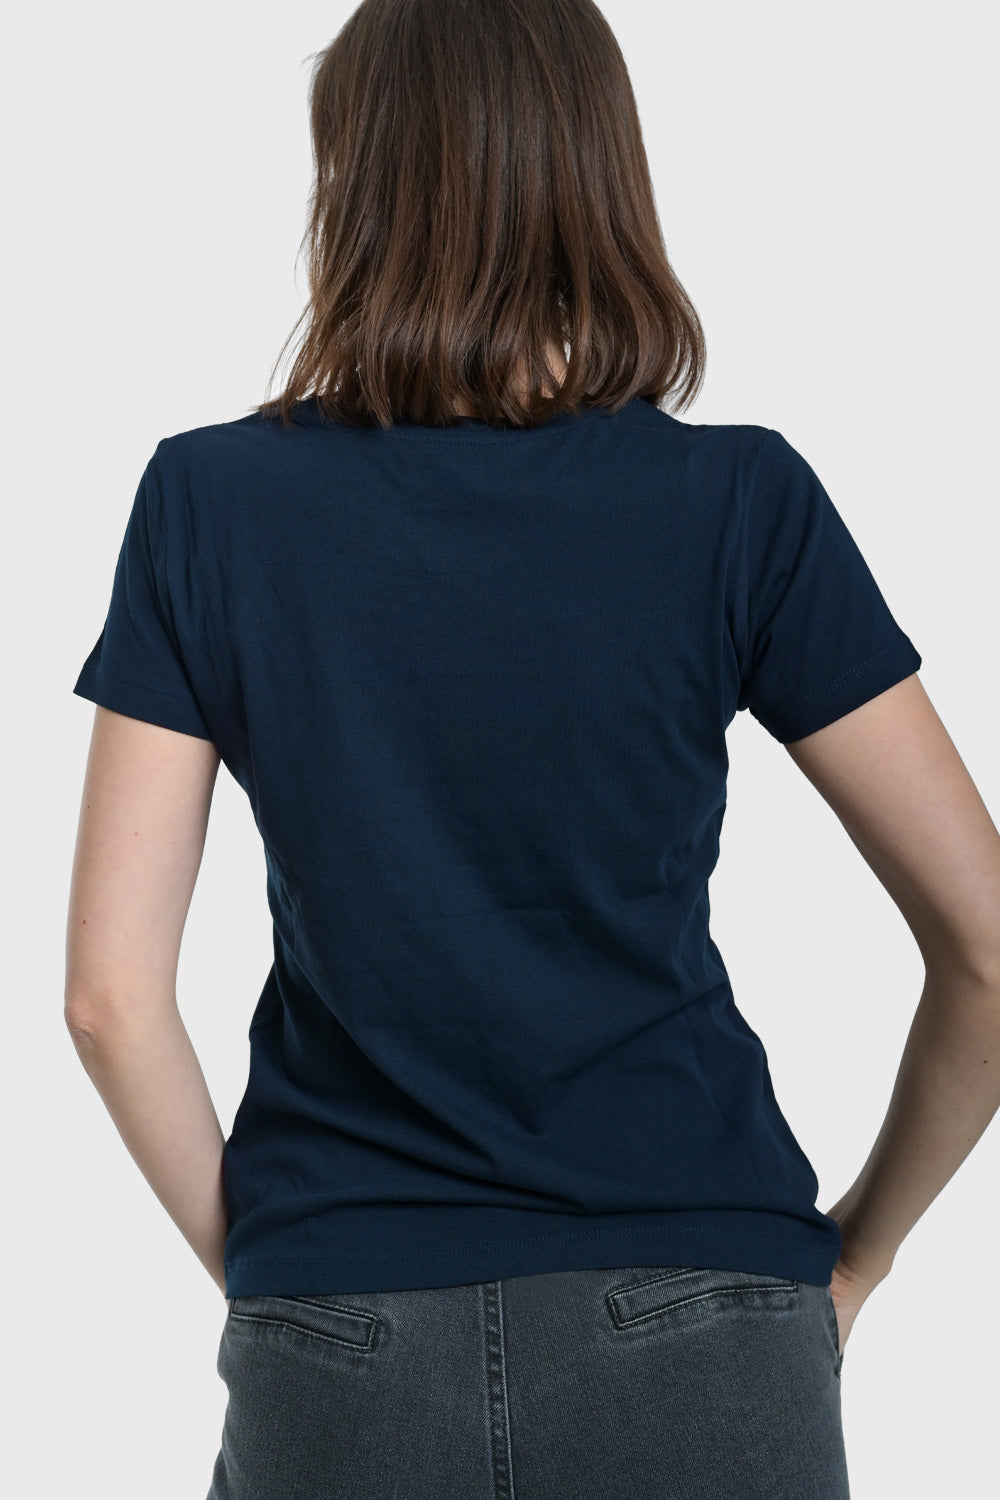 Tipra Organic Cotton Shirt - navy